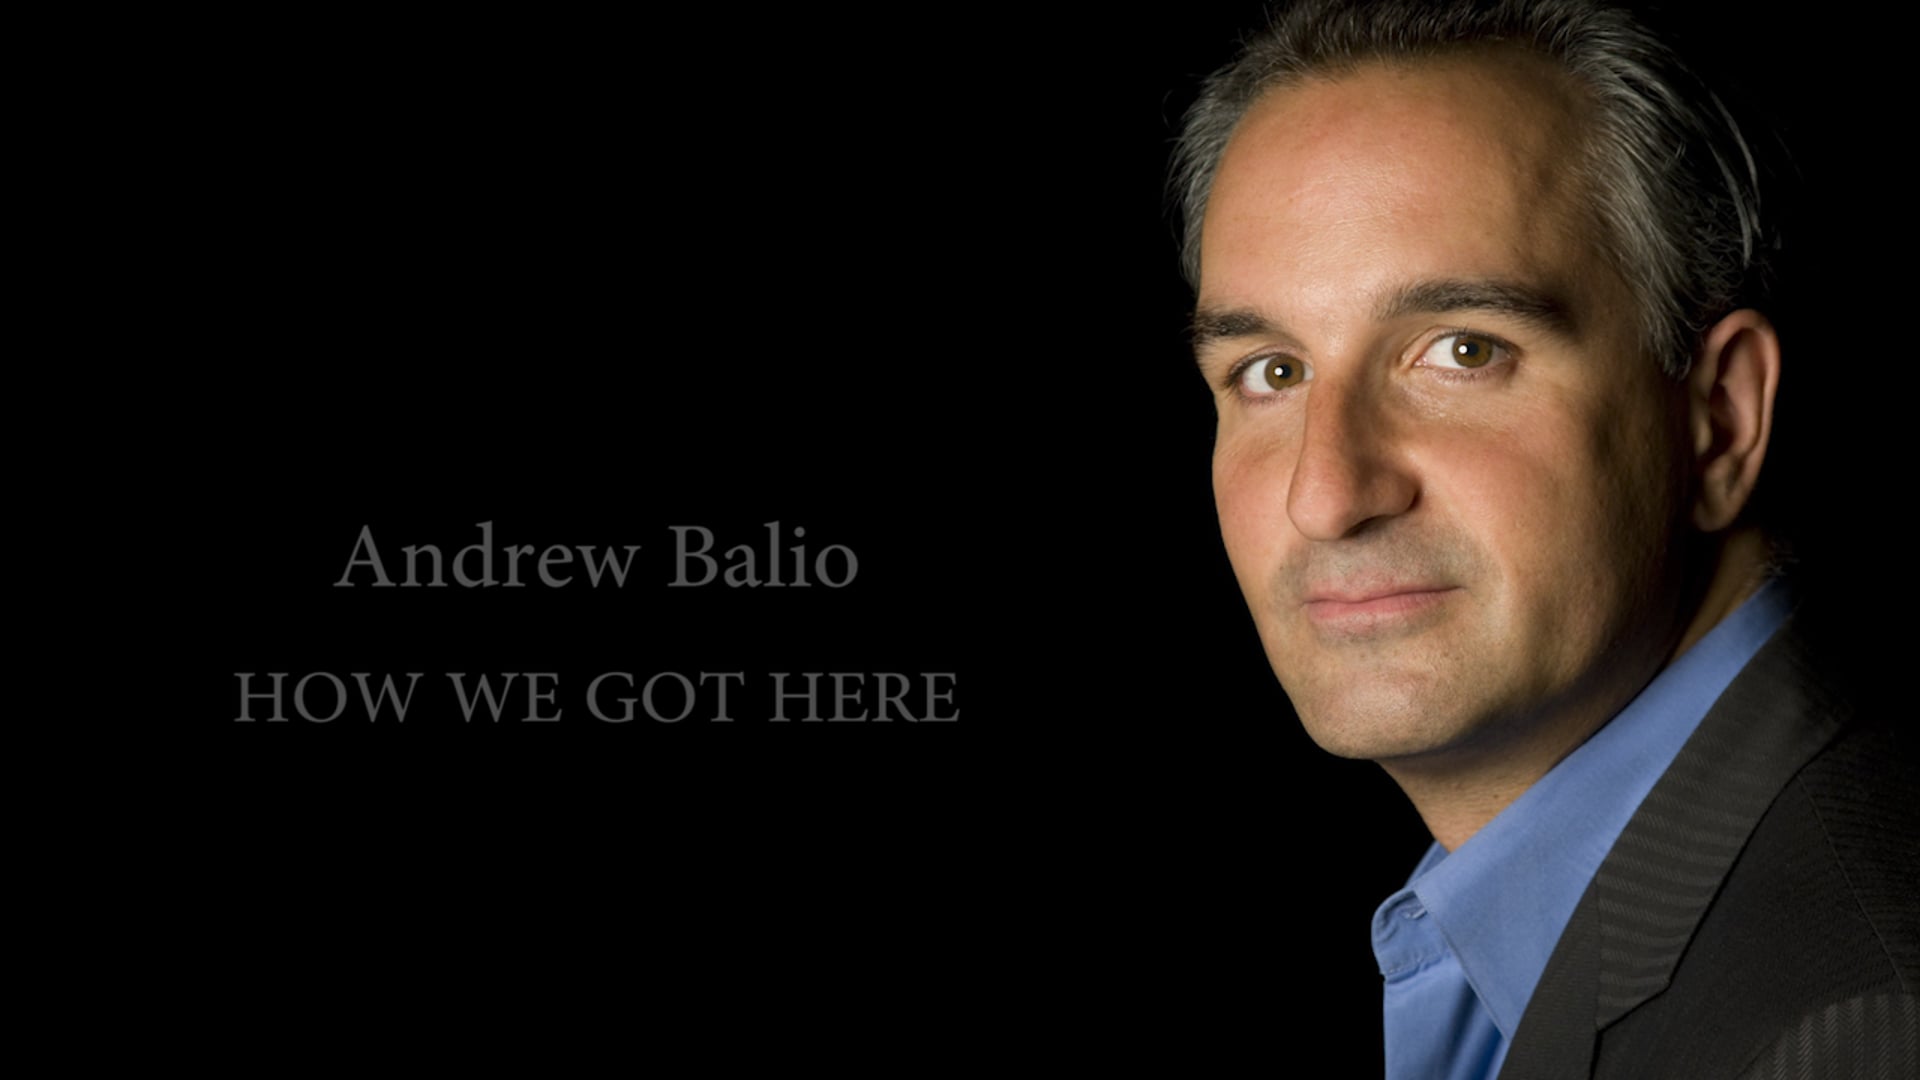 Andrew Balio: How We Got Here